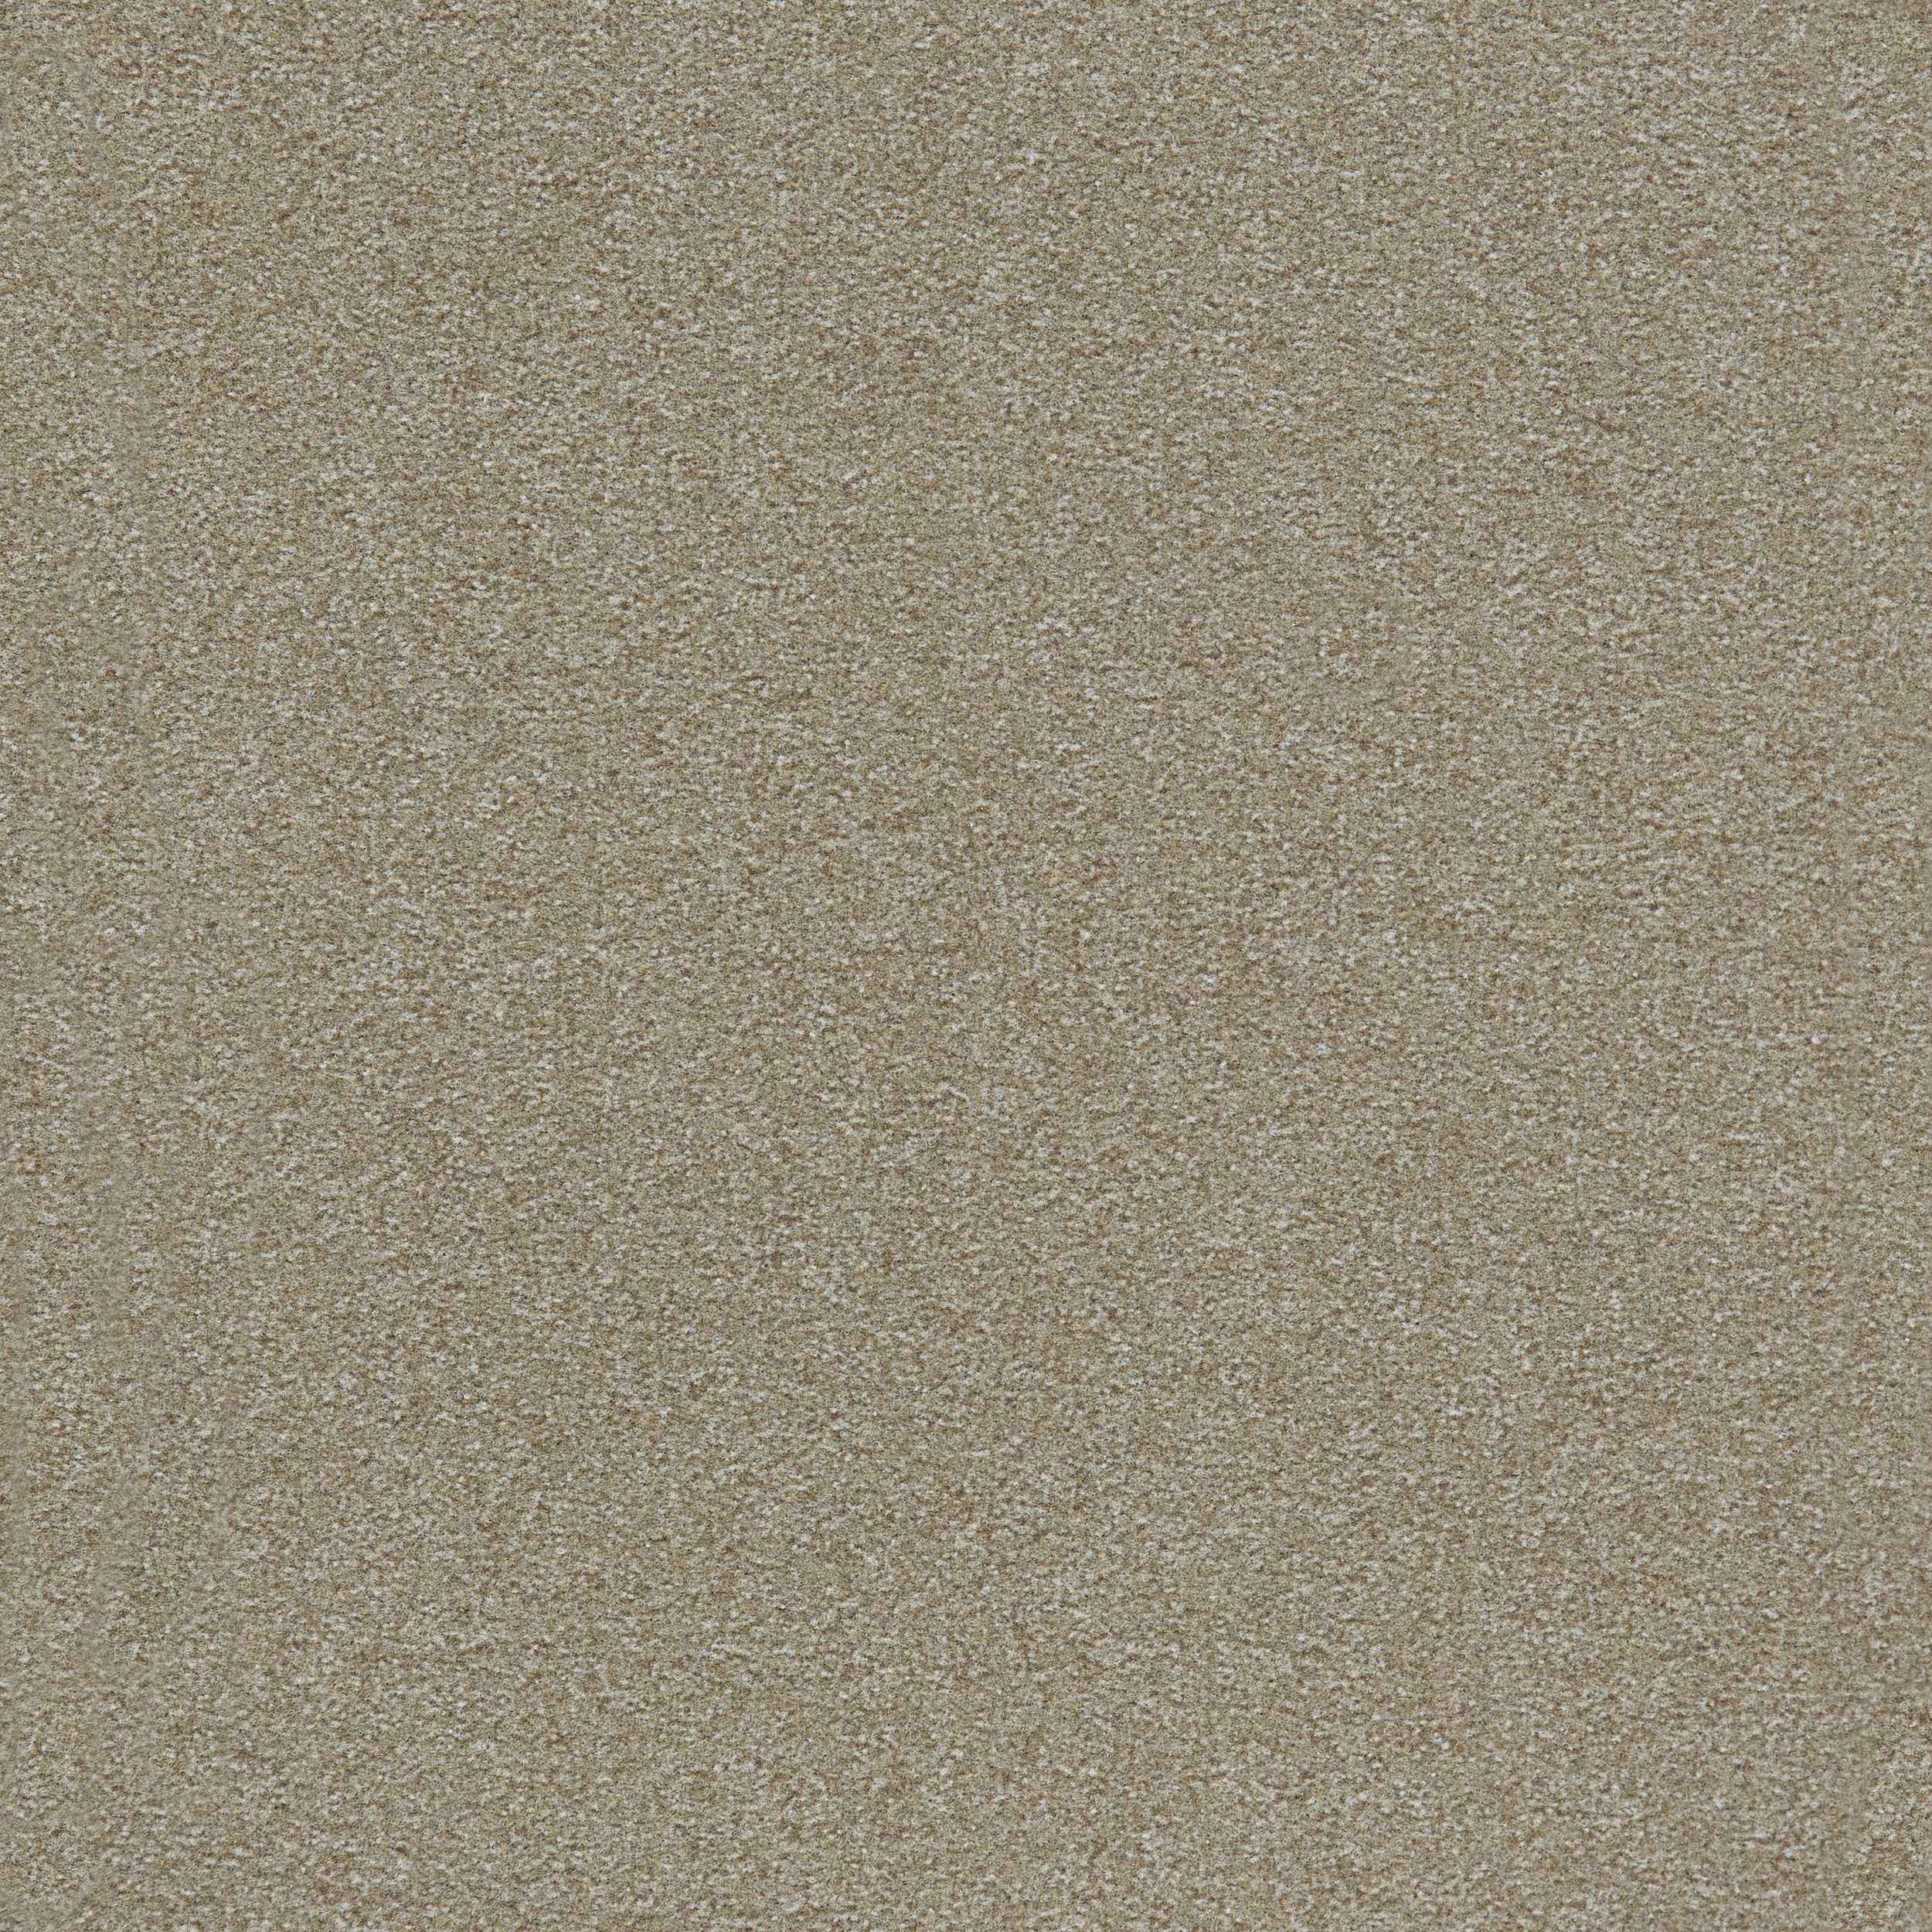 Heuga 725 Carpet Tile In Oyster afbeeldingnummer 2